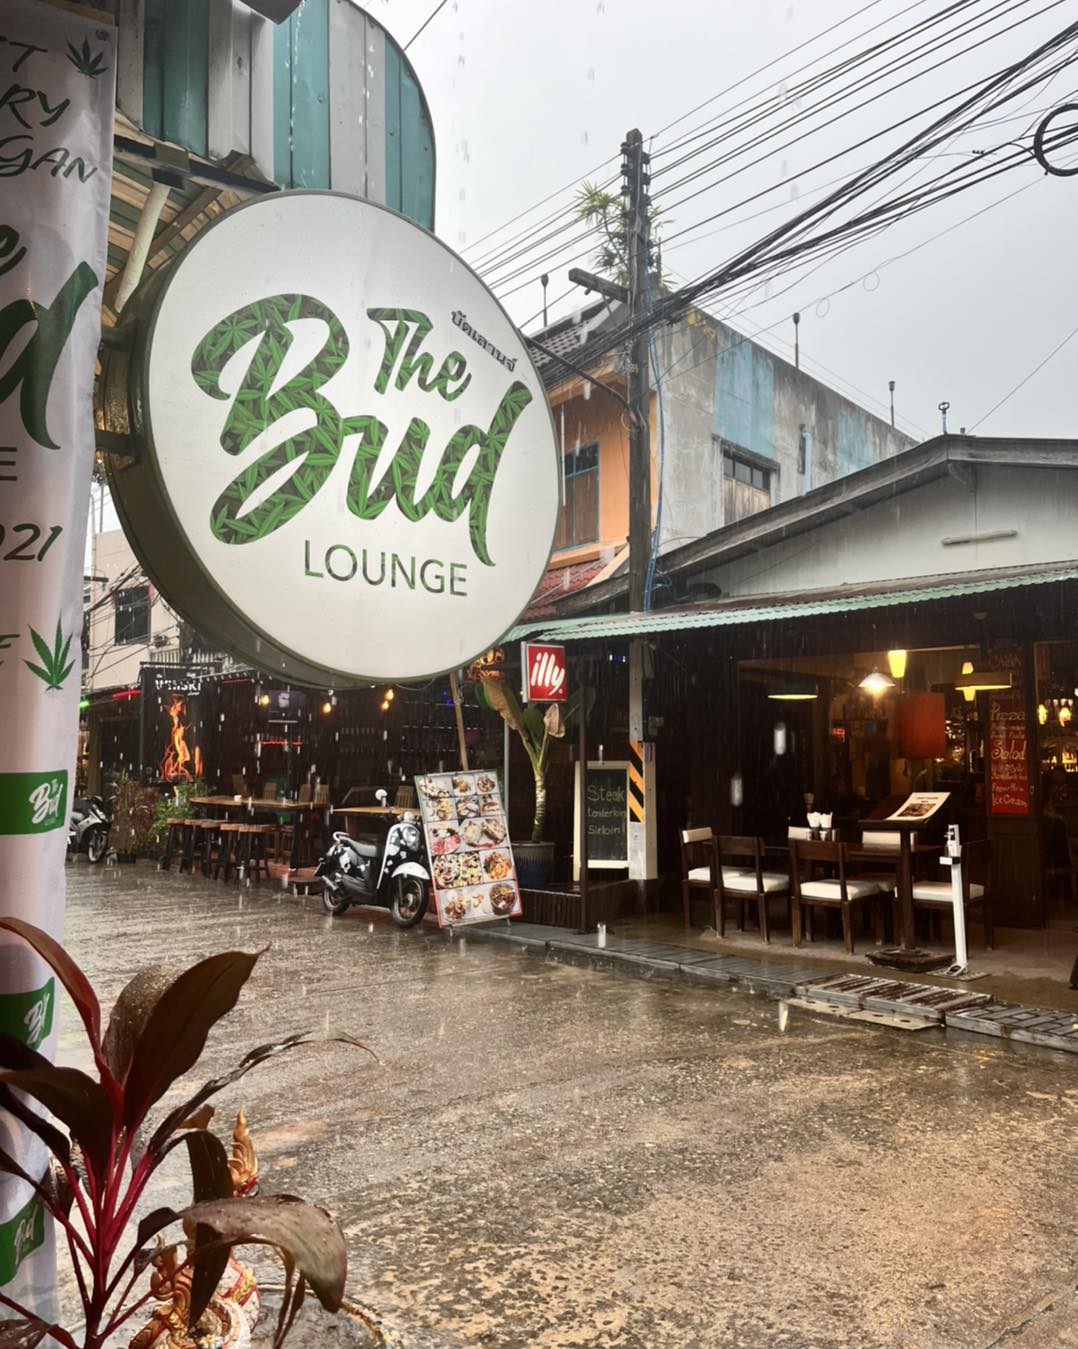 The entrance of the Bud Lounge Koh Phangan